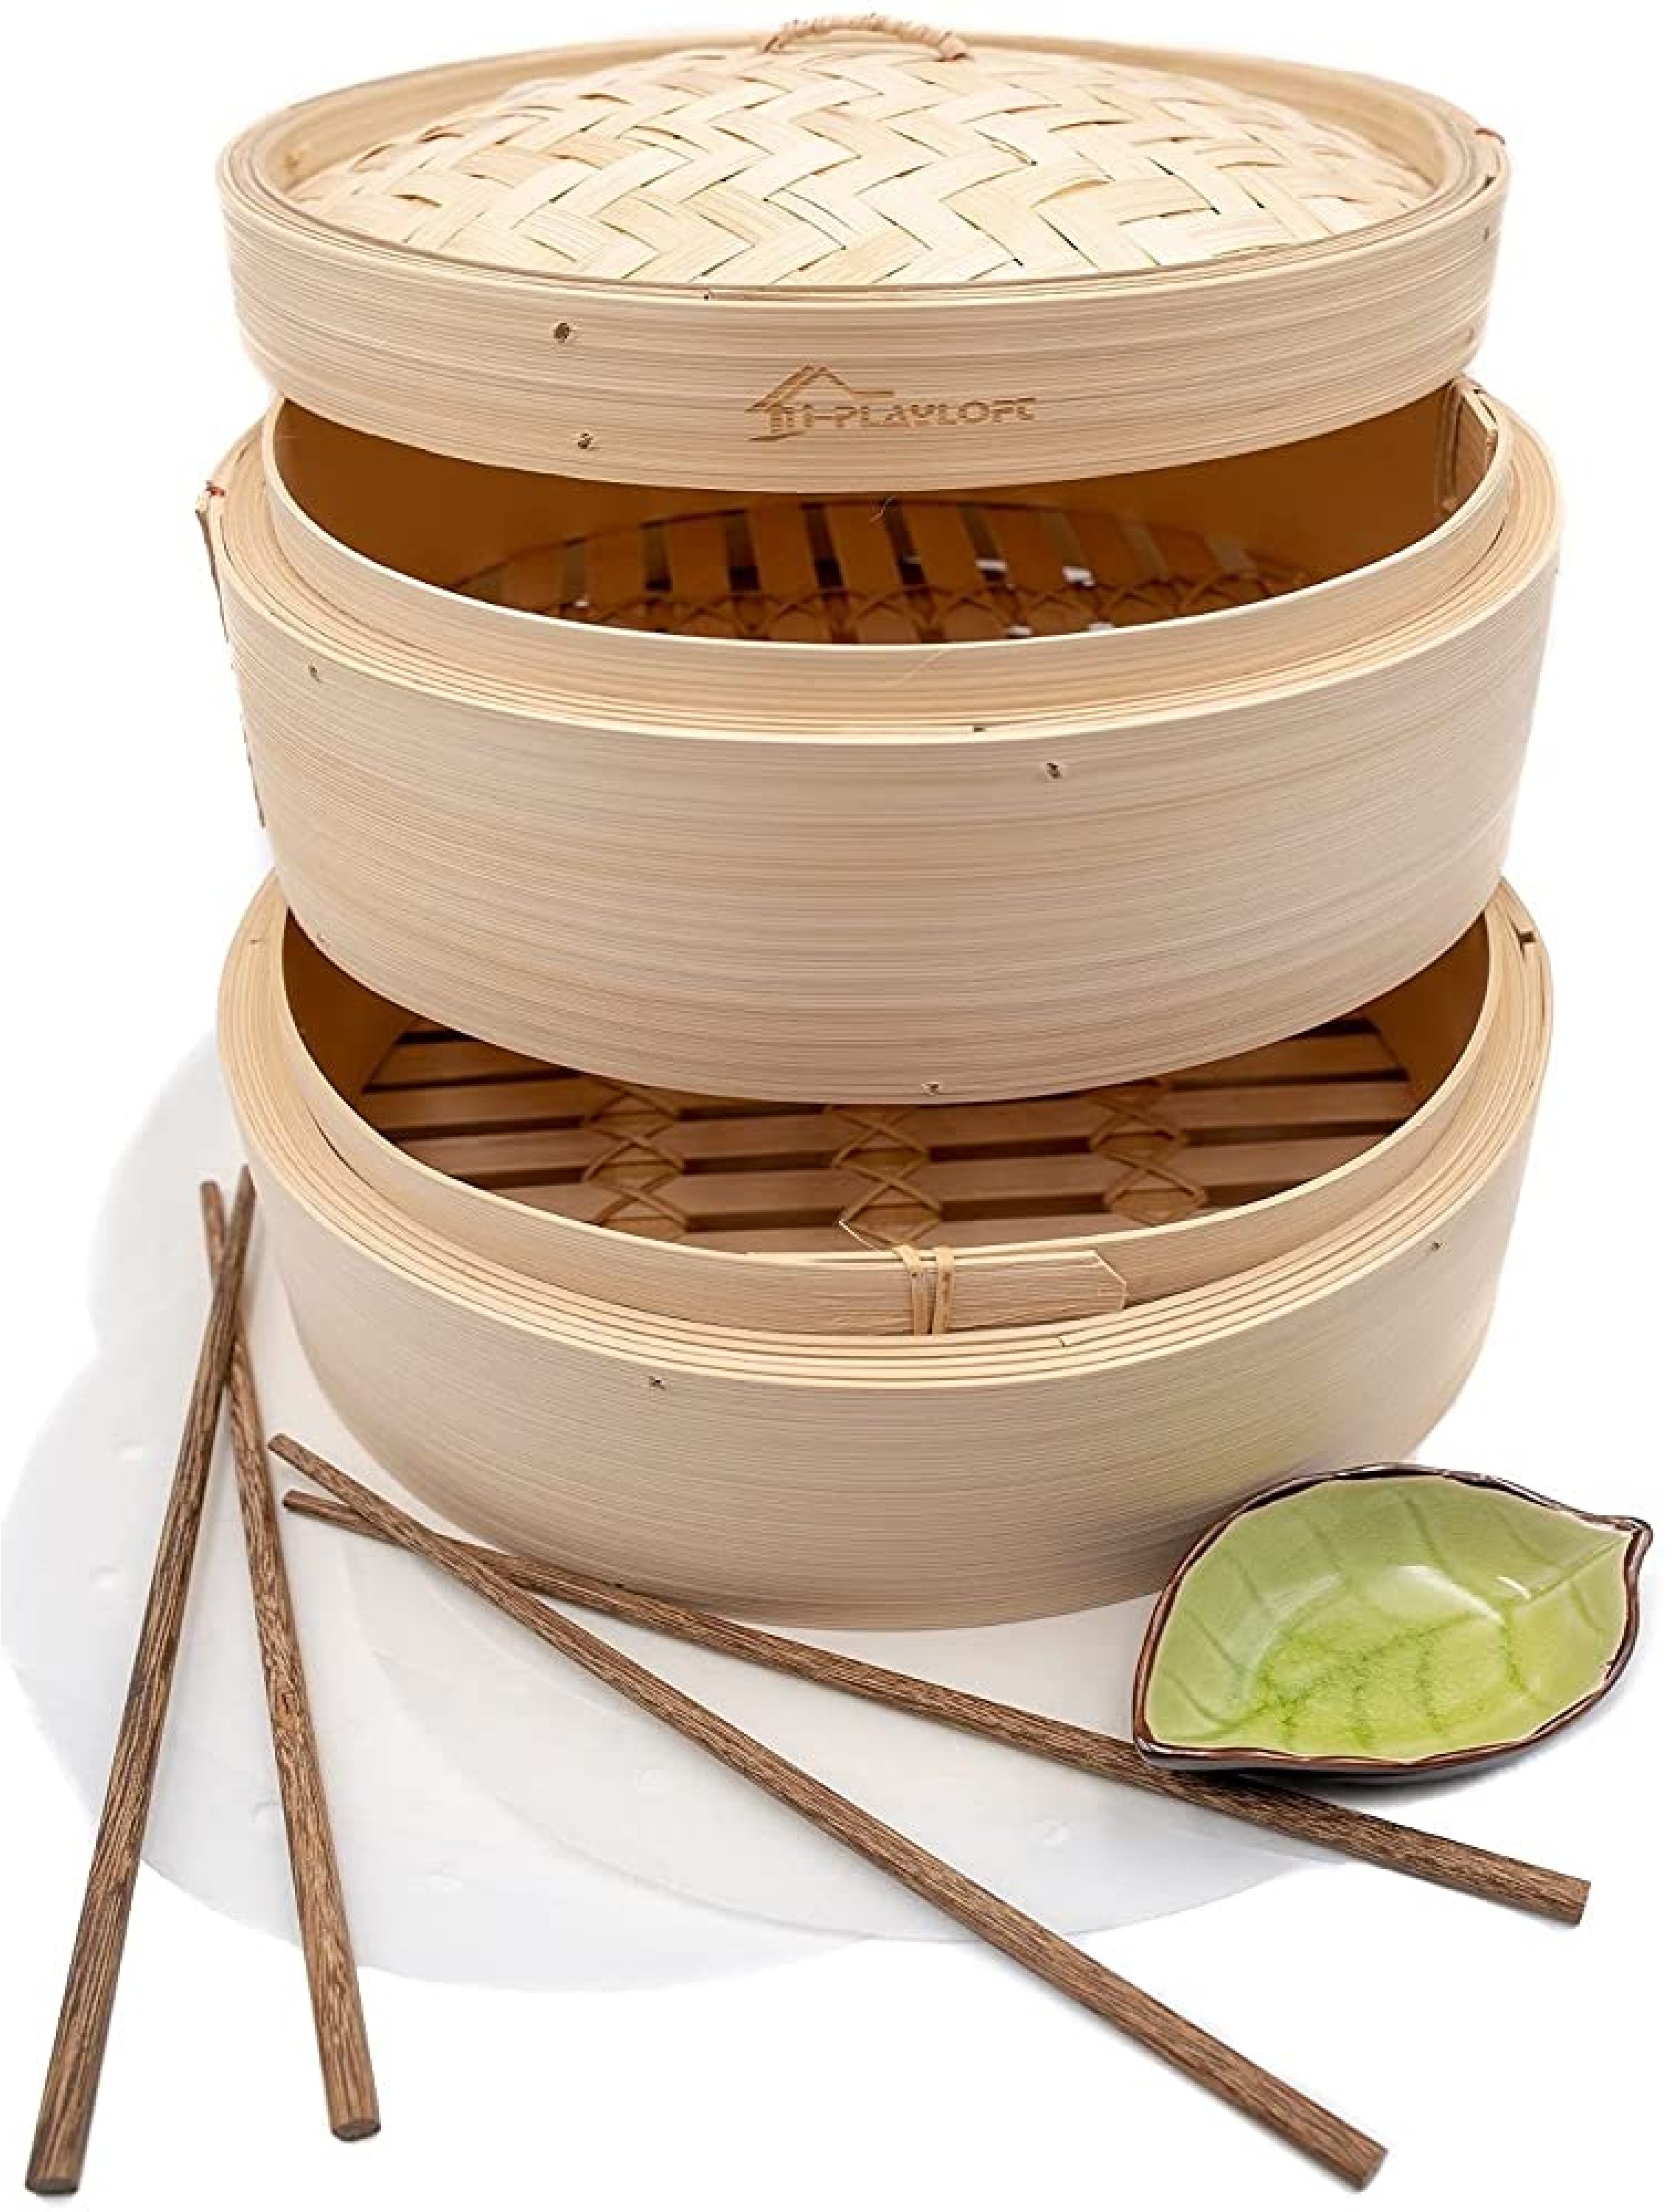 Premium 10 Inch Handmade Bamboo Steamer Two Tier Baskets Dim Sum Dumpling & Bao Bun Chinese Food Steamers Steam Baskets For Rice Vegetables Meat & Fish Included 2 Sets Chopsticks 20 Liners & Sauce Dish - B029KU9JU